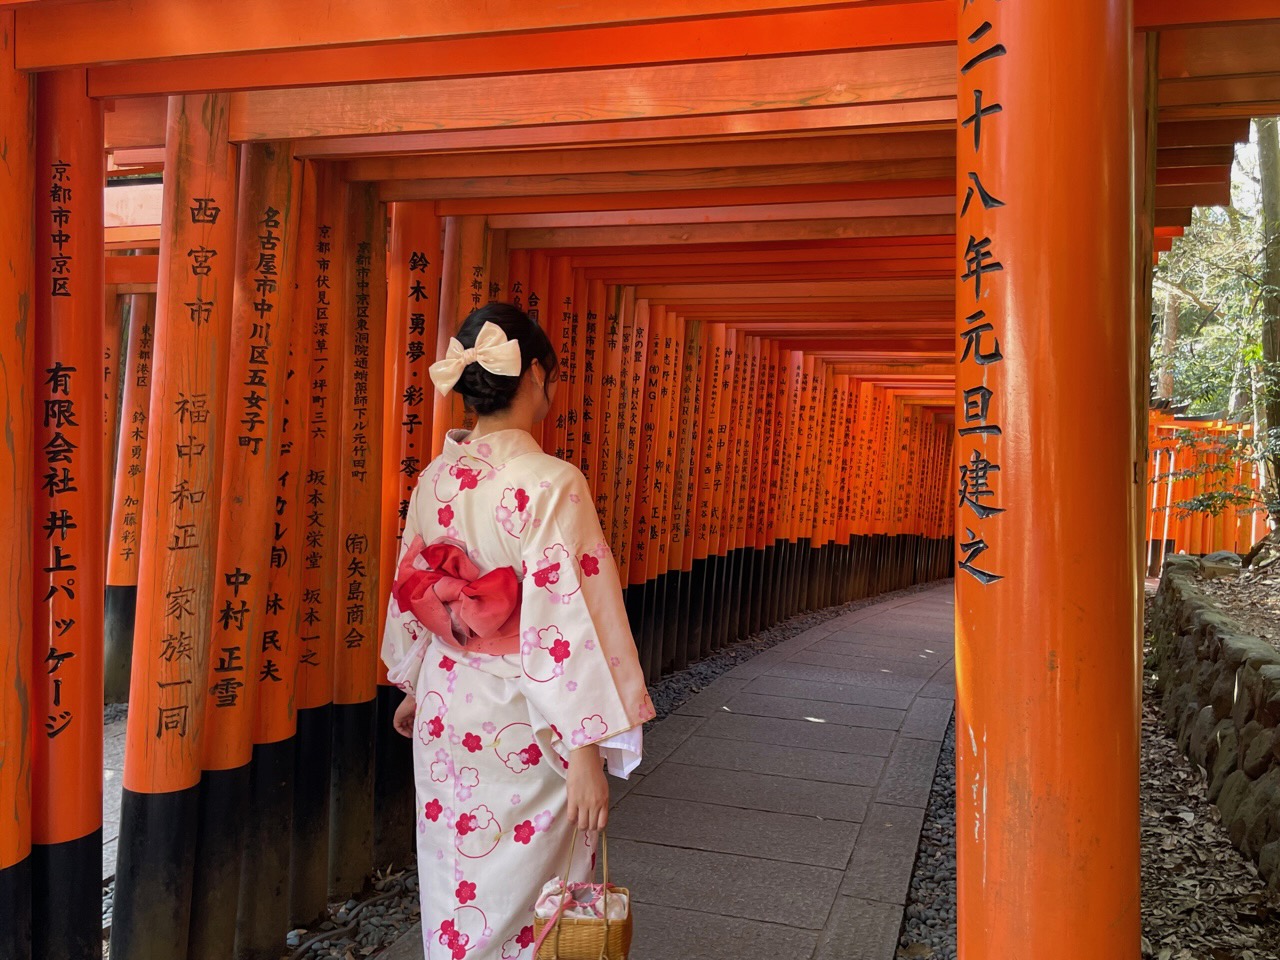 Fushimi Inari Taisha thousands of orange Torii gates